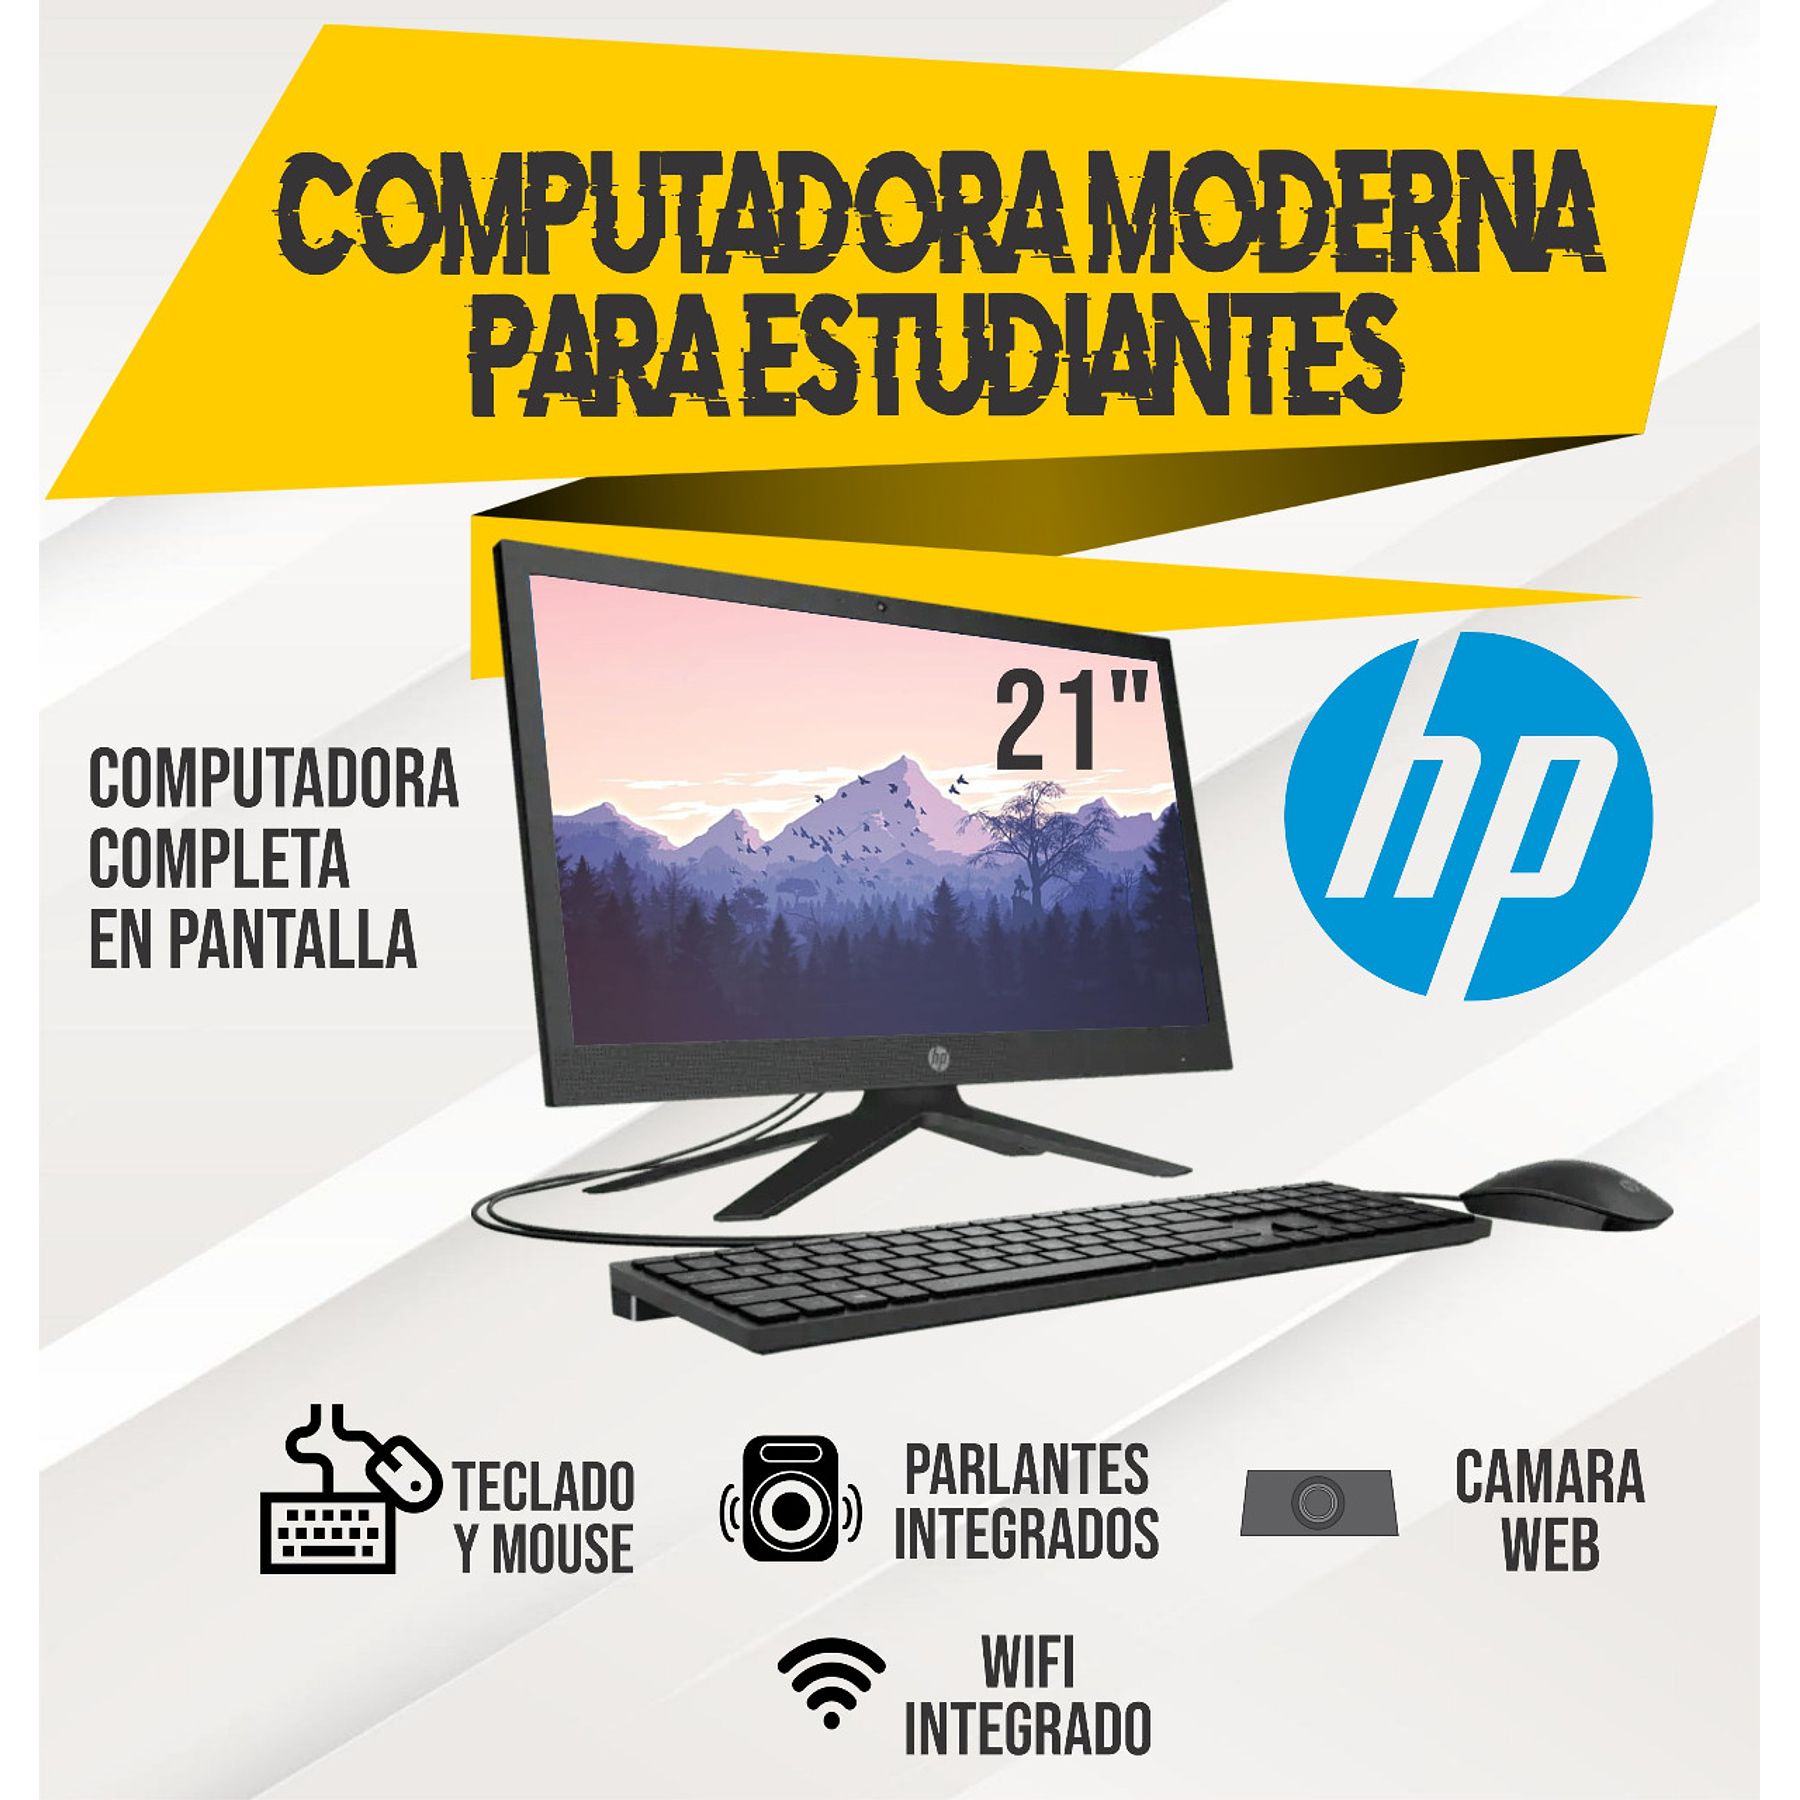 COMPUTADORA MODERNA HP INTEL CEL DUAL CORE J4025 2.0GHZ / RAM 4GB / ALMACENAMIENTO 1TB / PANTALLA 20.7 PULGADAS FULL HD / 200 G8 21 